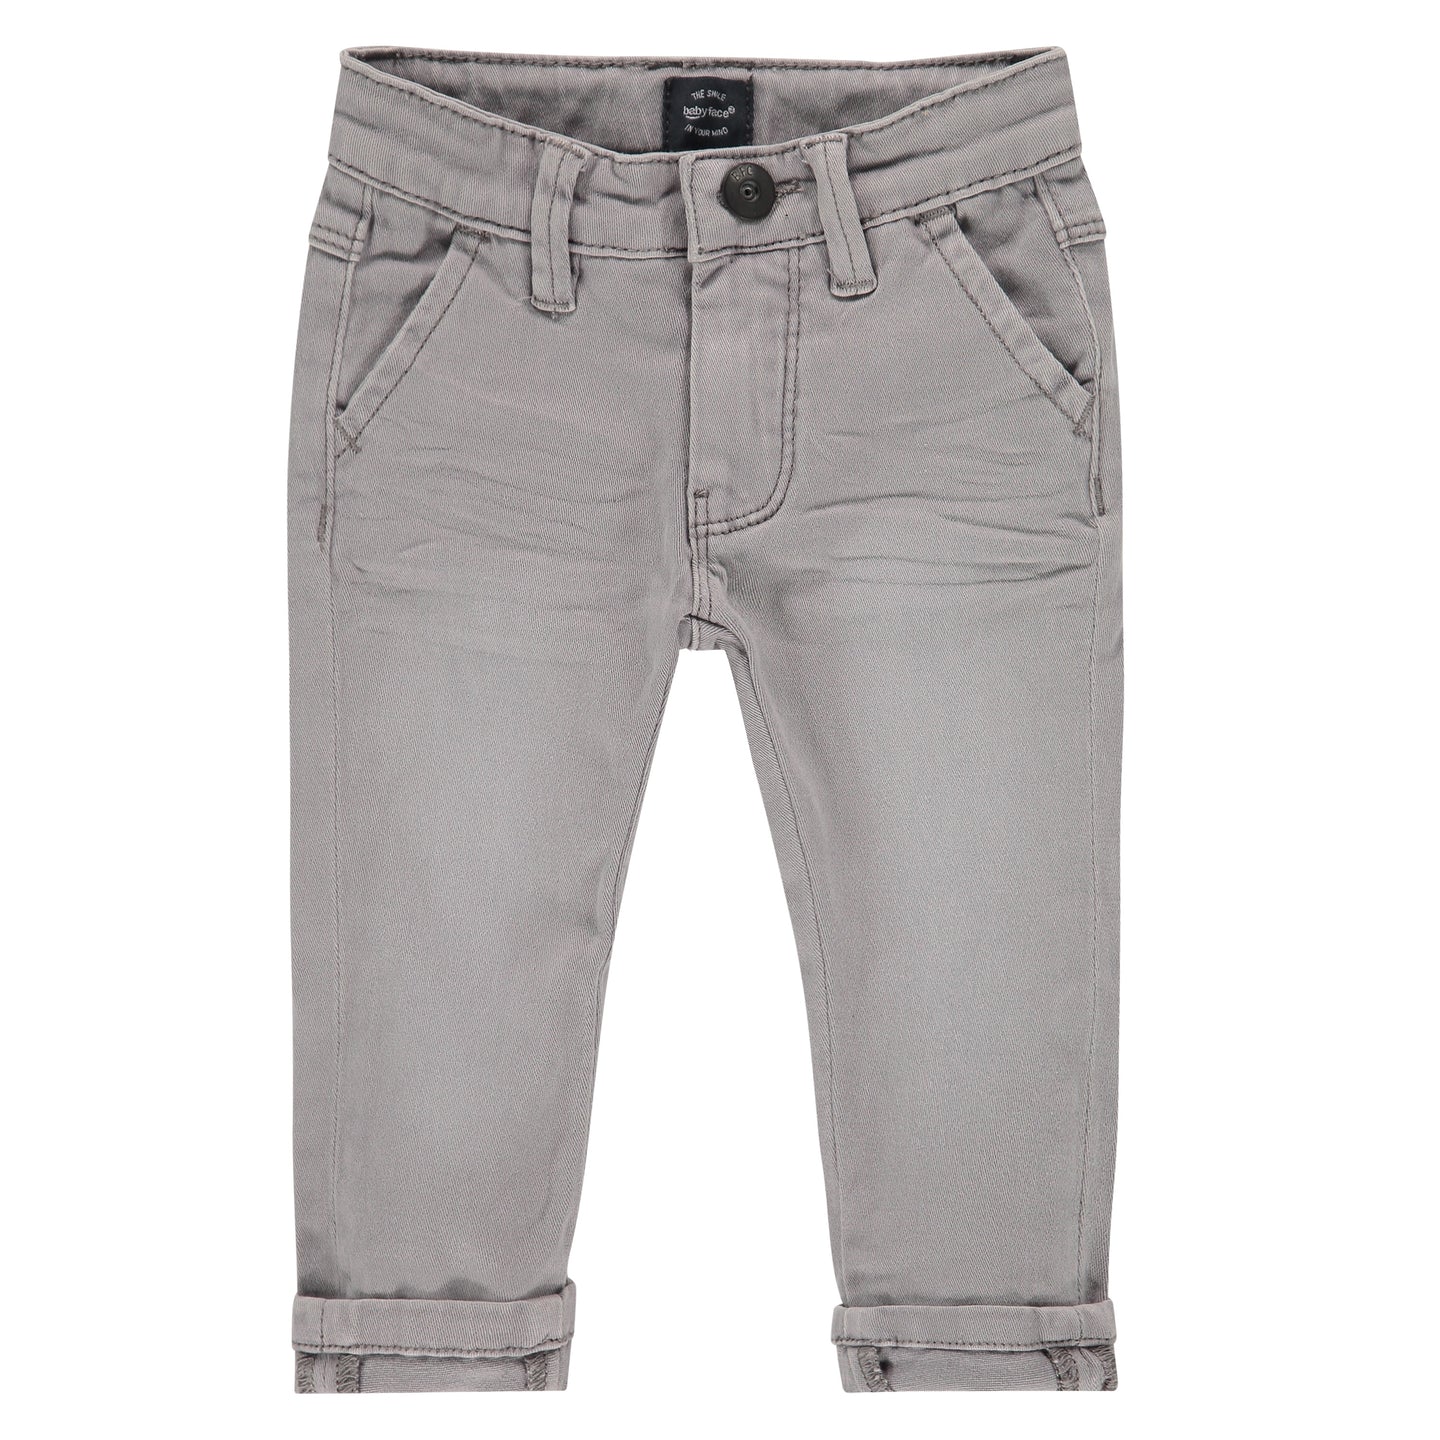 Babyface - Boys Jogg Jeans Short - Light Grey Denim